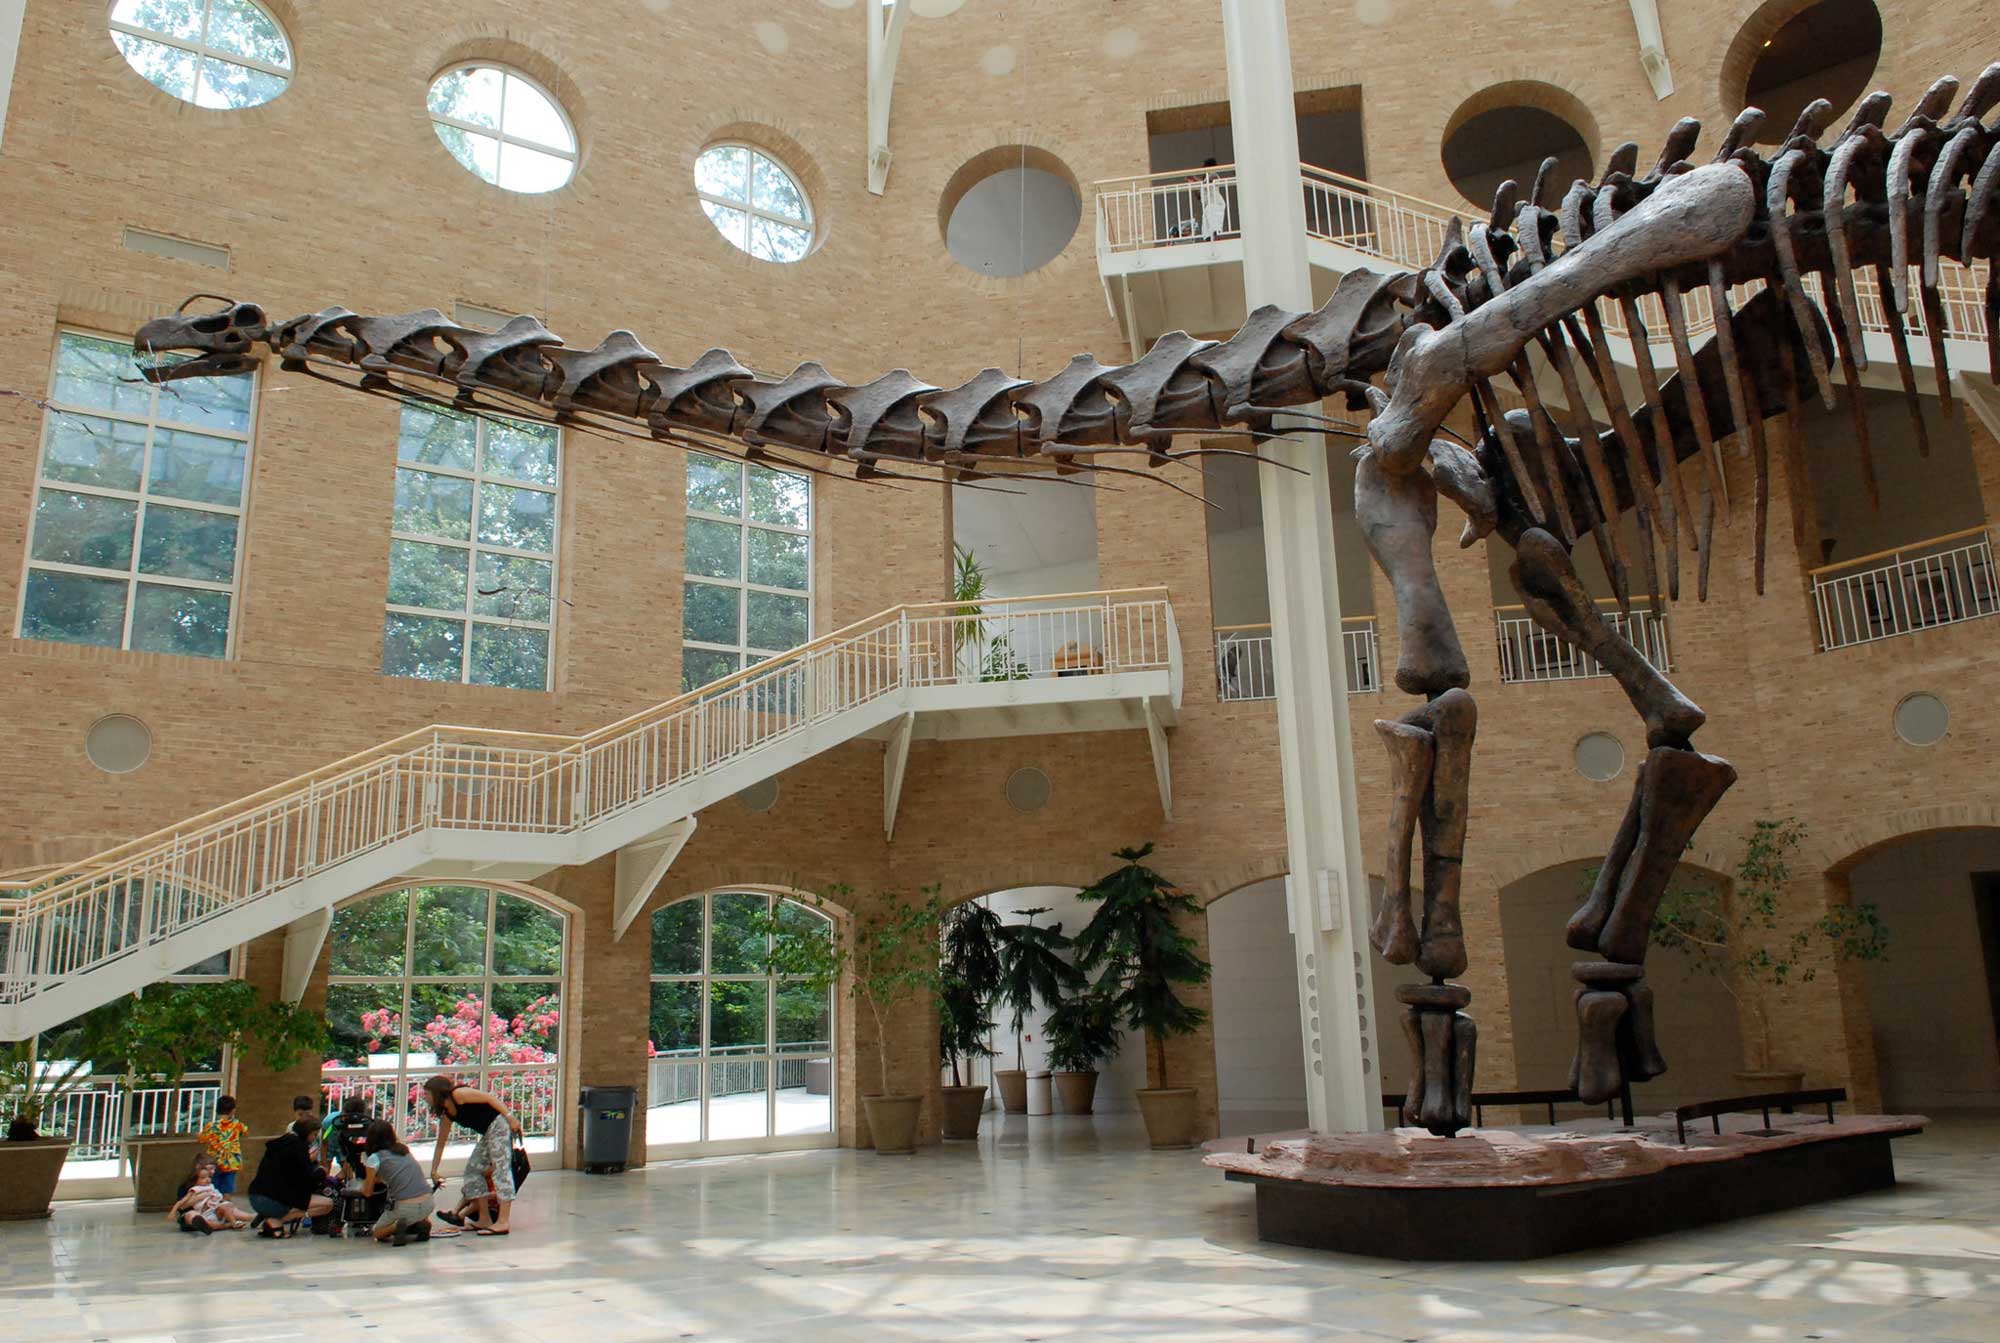 Photograph of a dinosaur skeleton on display at the Fernbank Museum in Atlanta, Georgia.